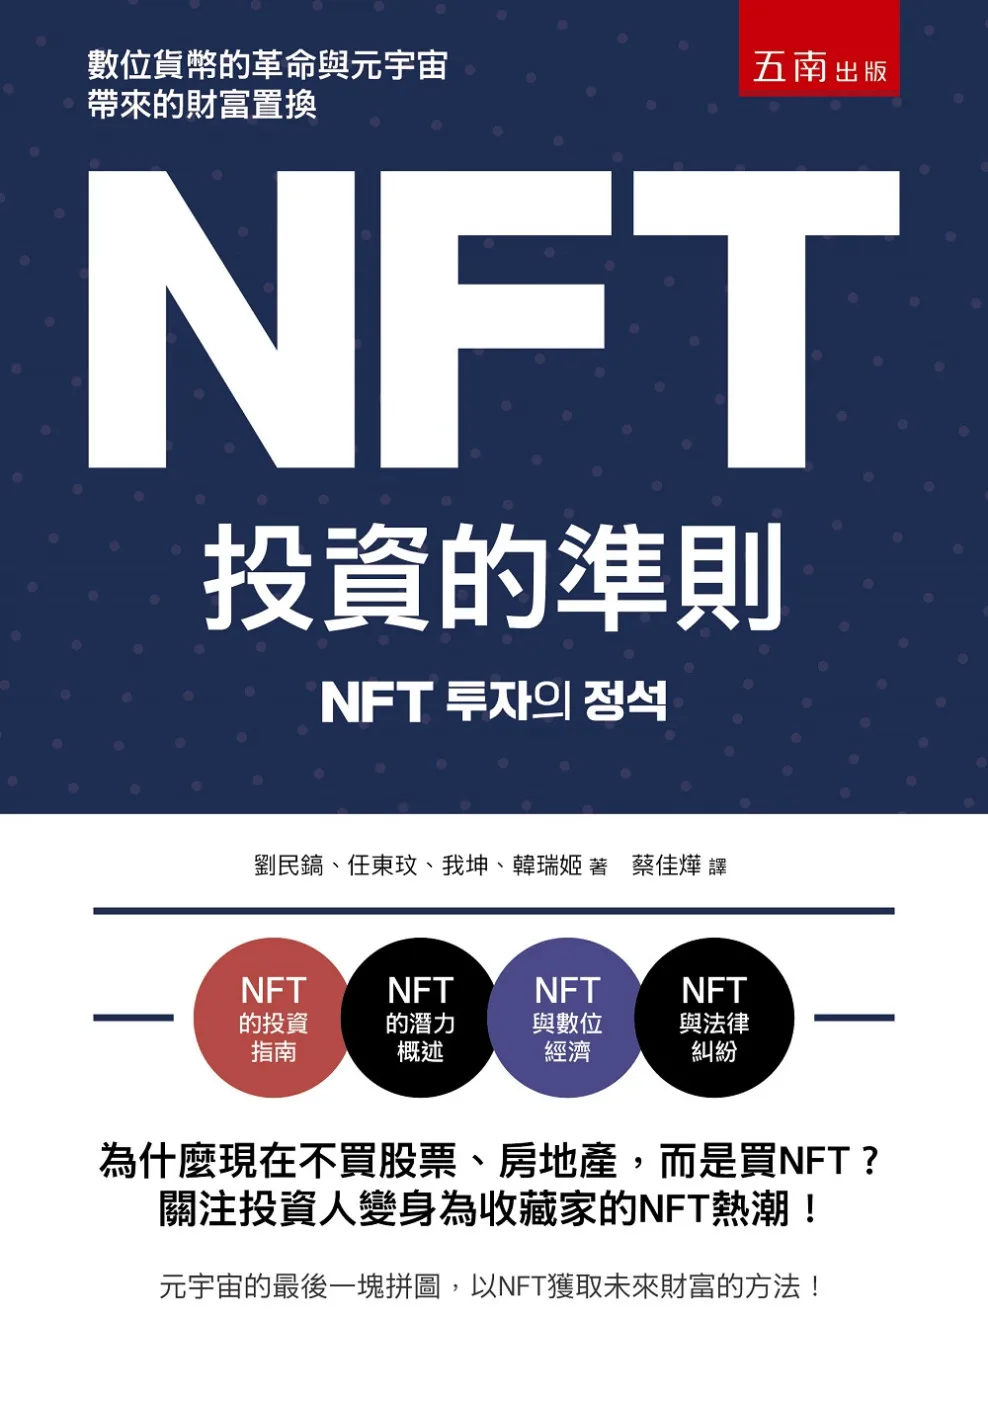 NFT投資的準則